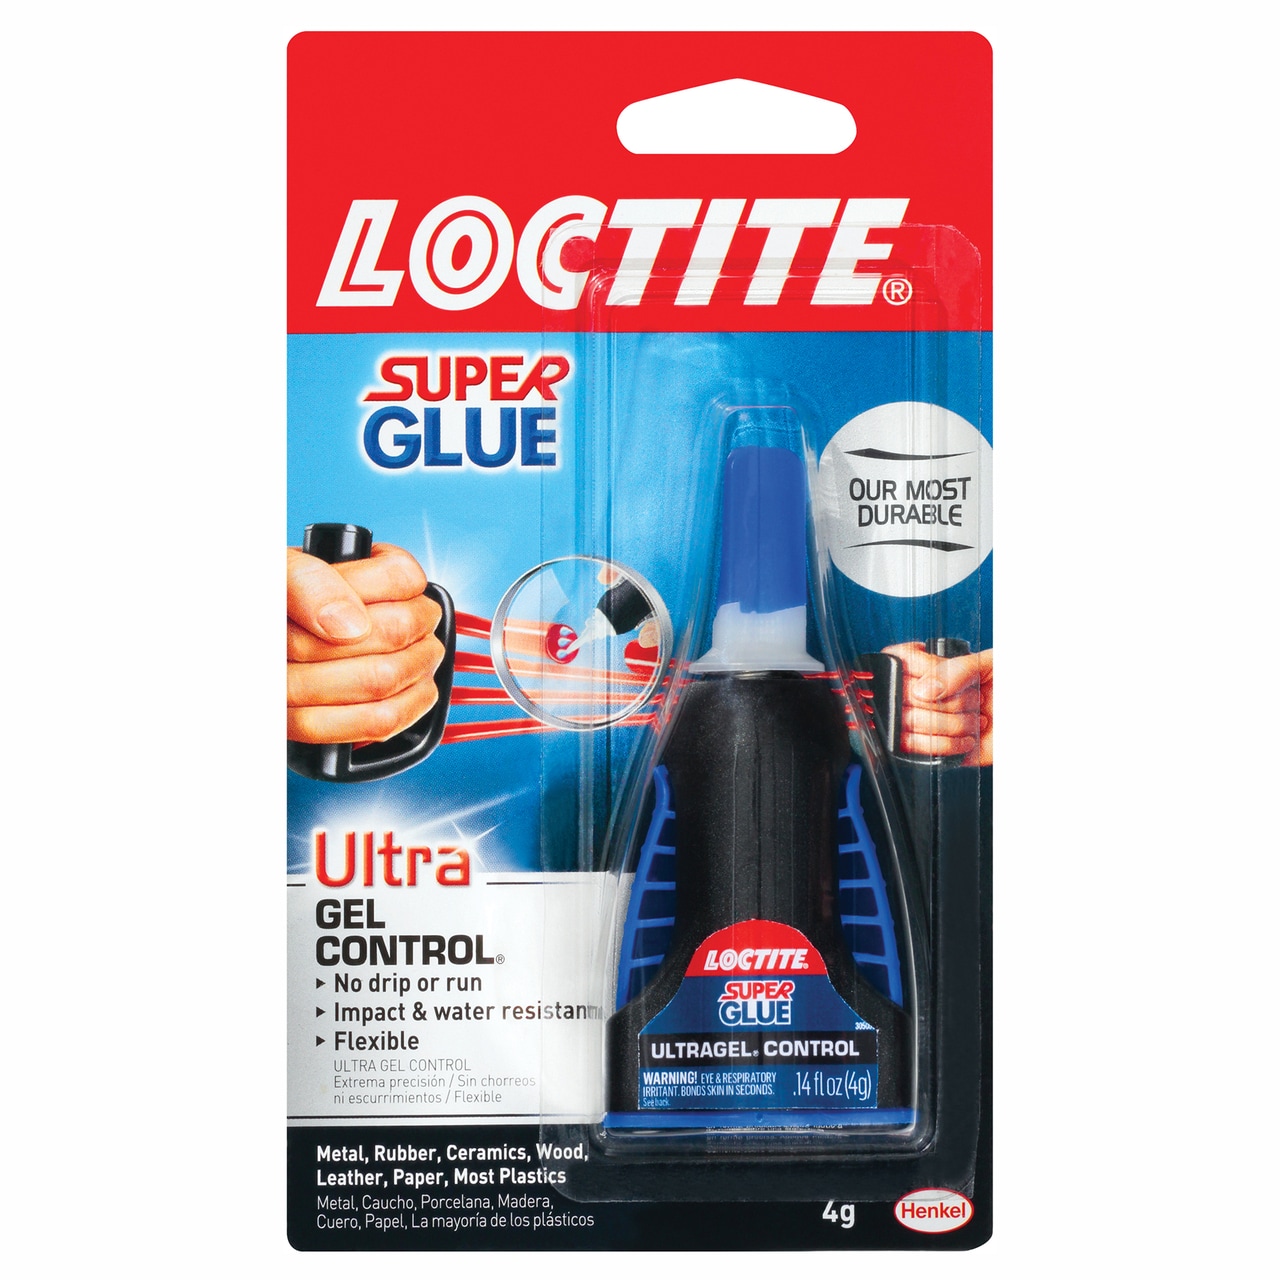 Loctite Super Glue Gel Control  UV Resins, Cements, Epoxies